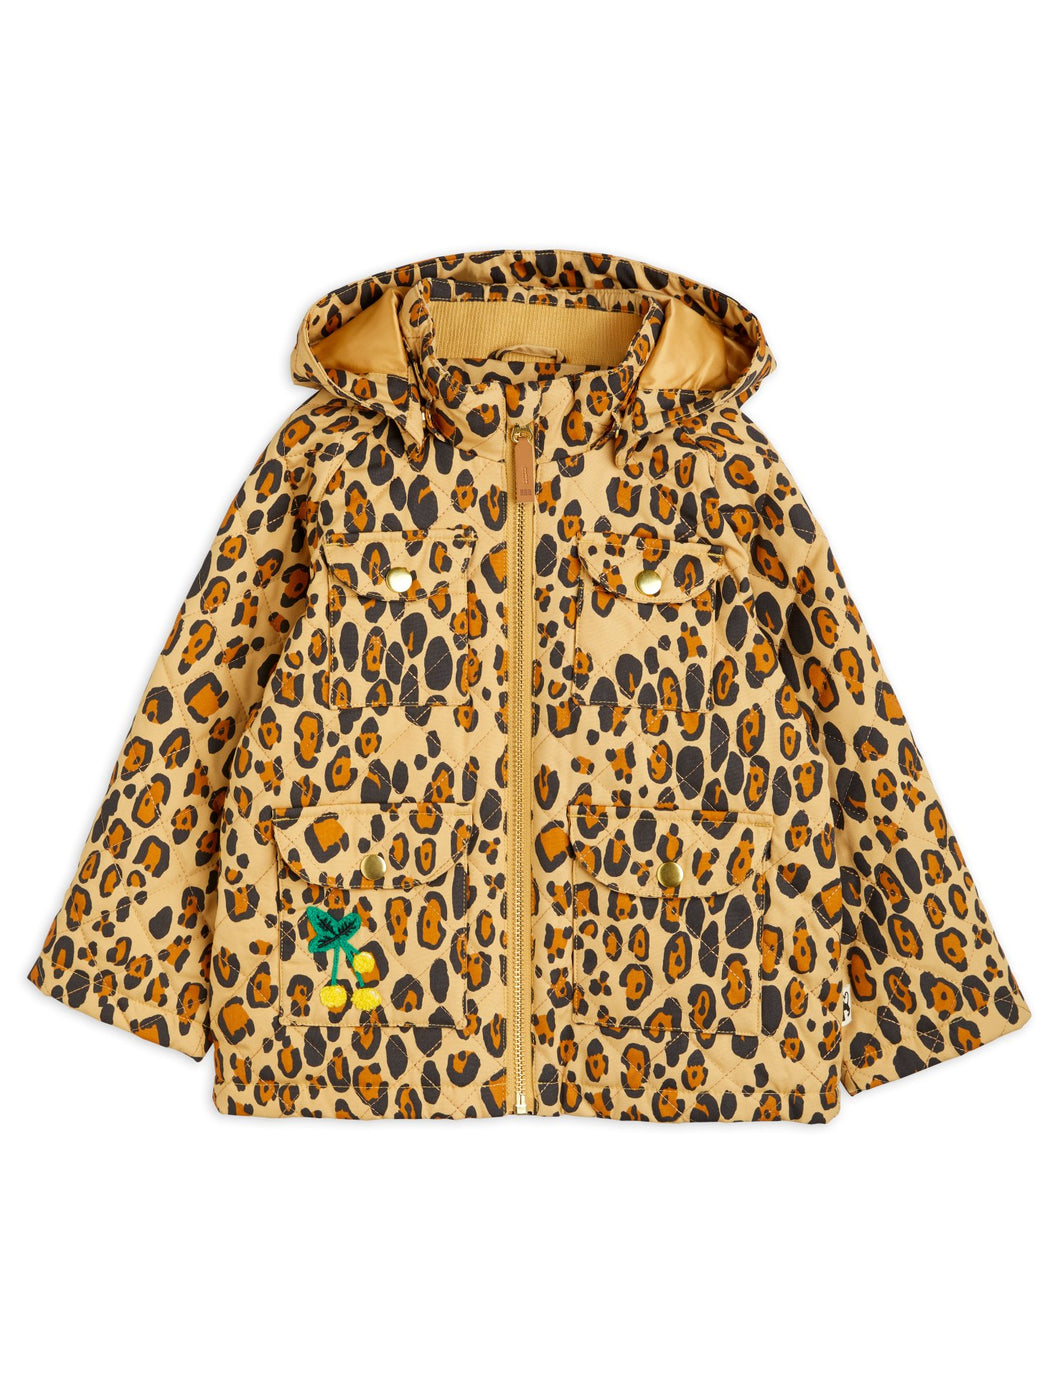 Mini Rodini Leopard Quilted Jacket